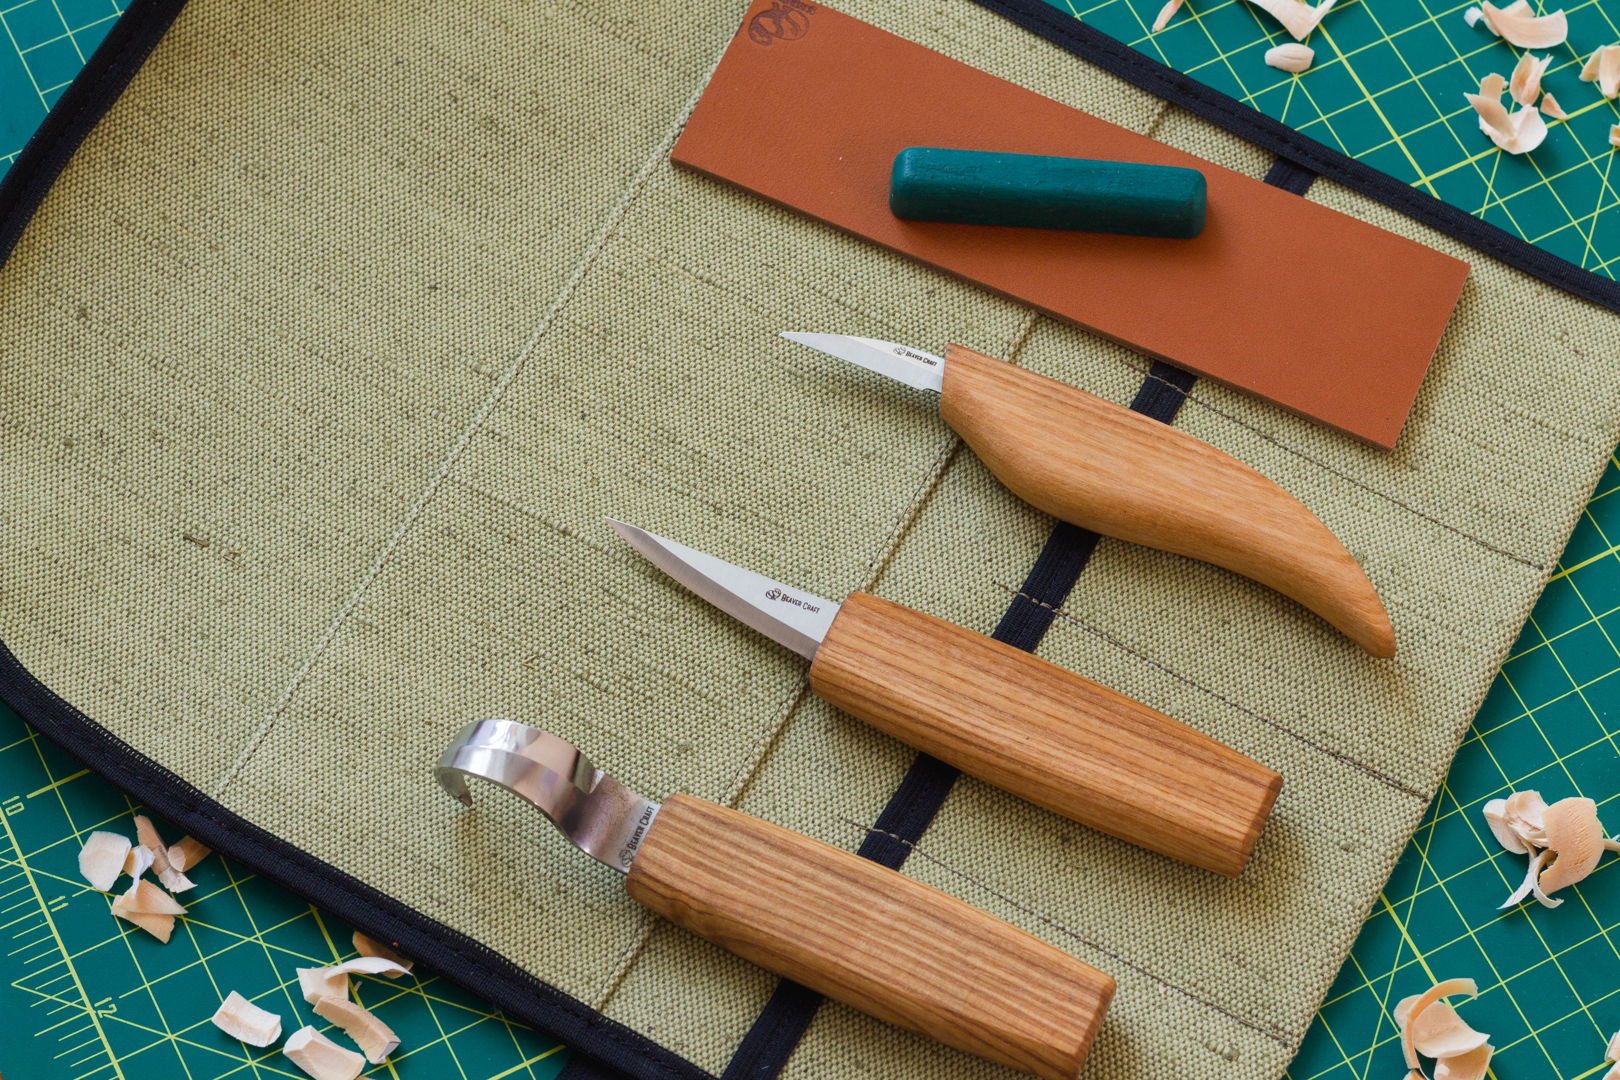 Wood whittling left-handed tools set